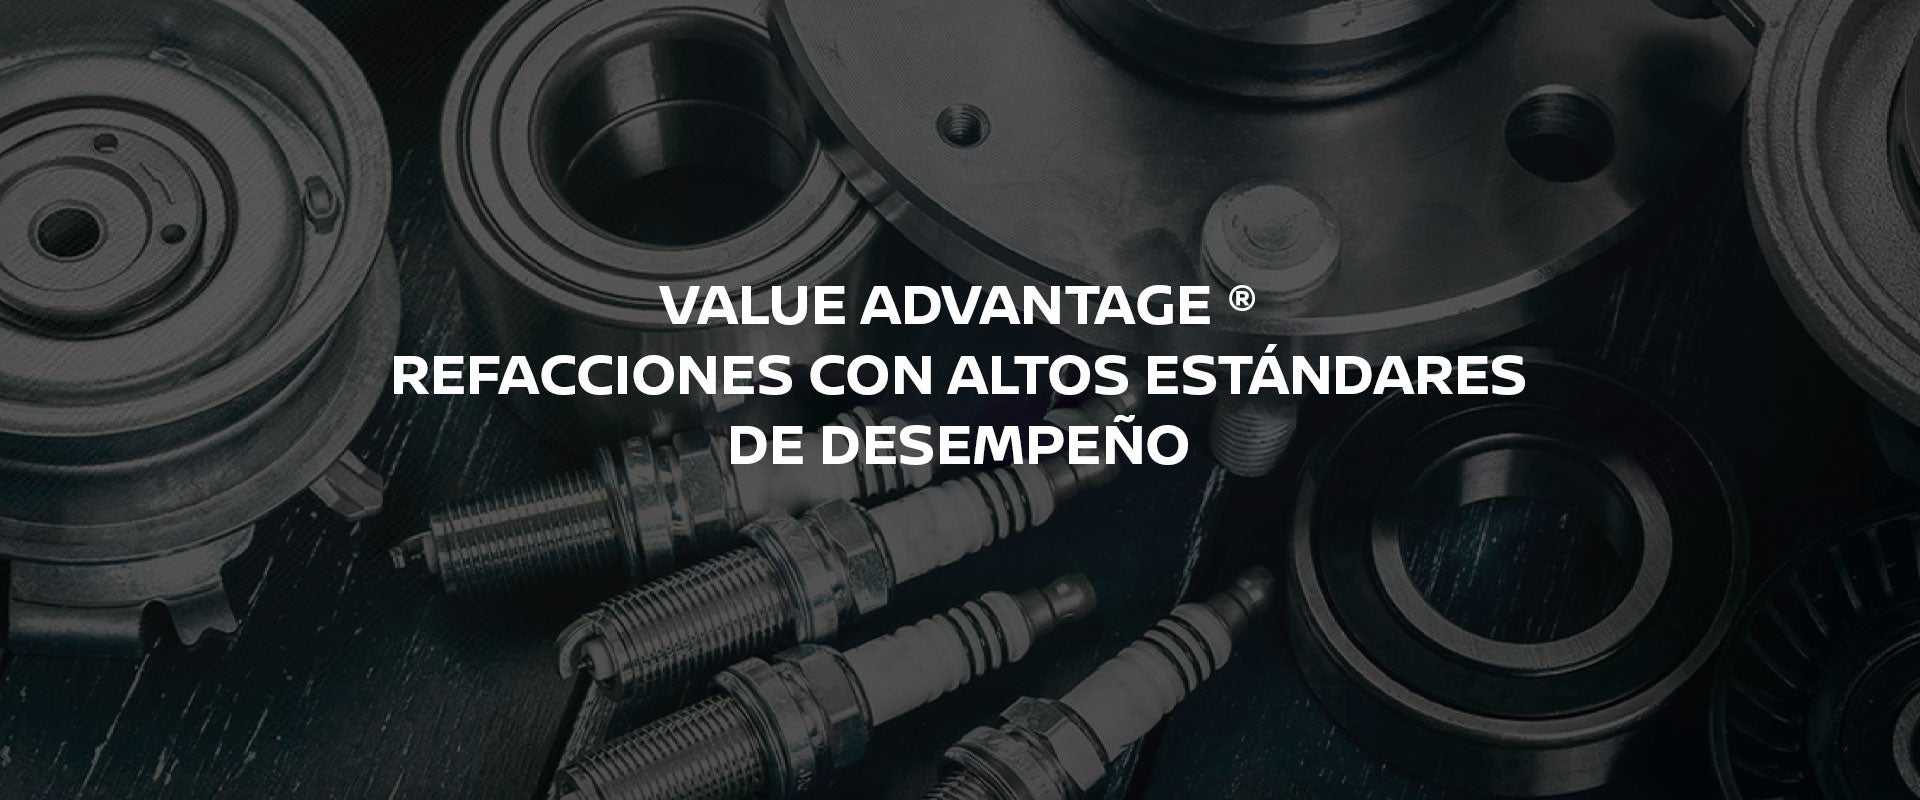 value-advantage-banner